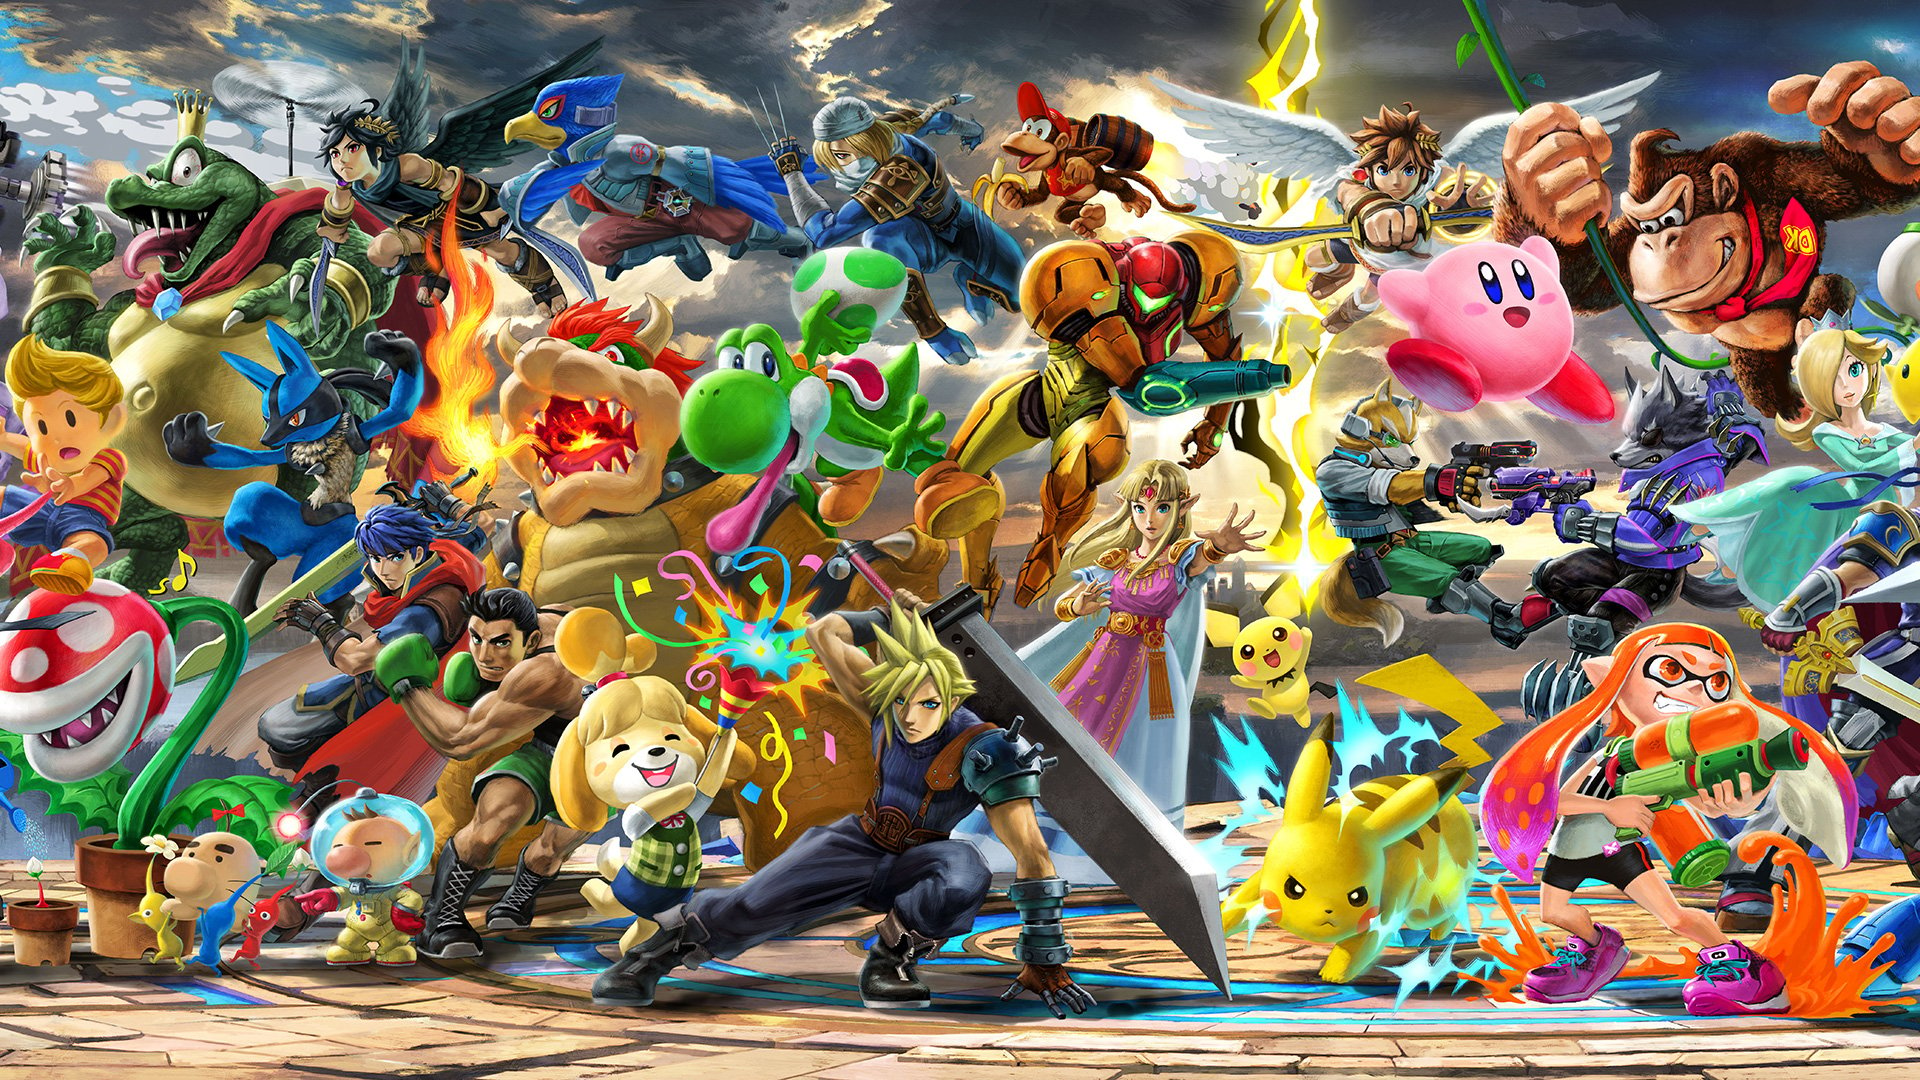 Nintendo's Shigeru Miyamoto Confirms More Movies on the Way